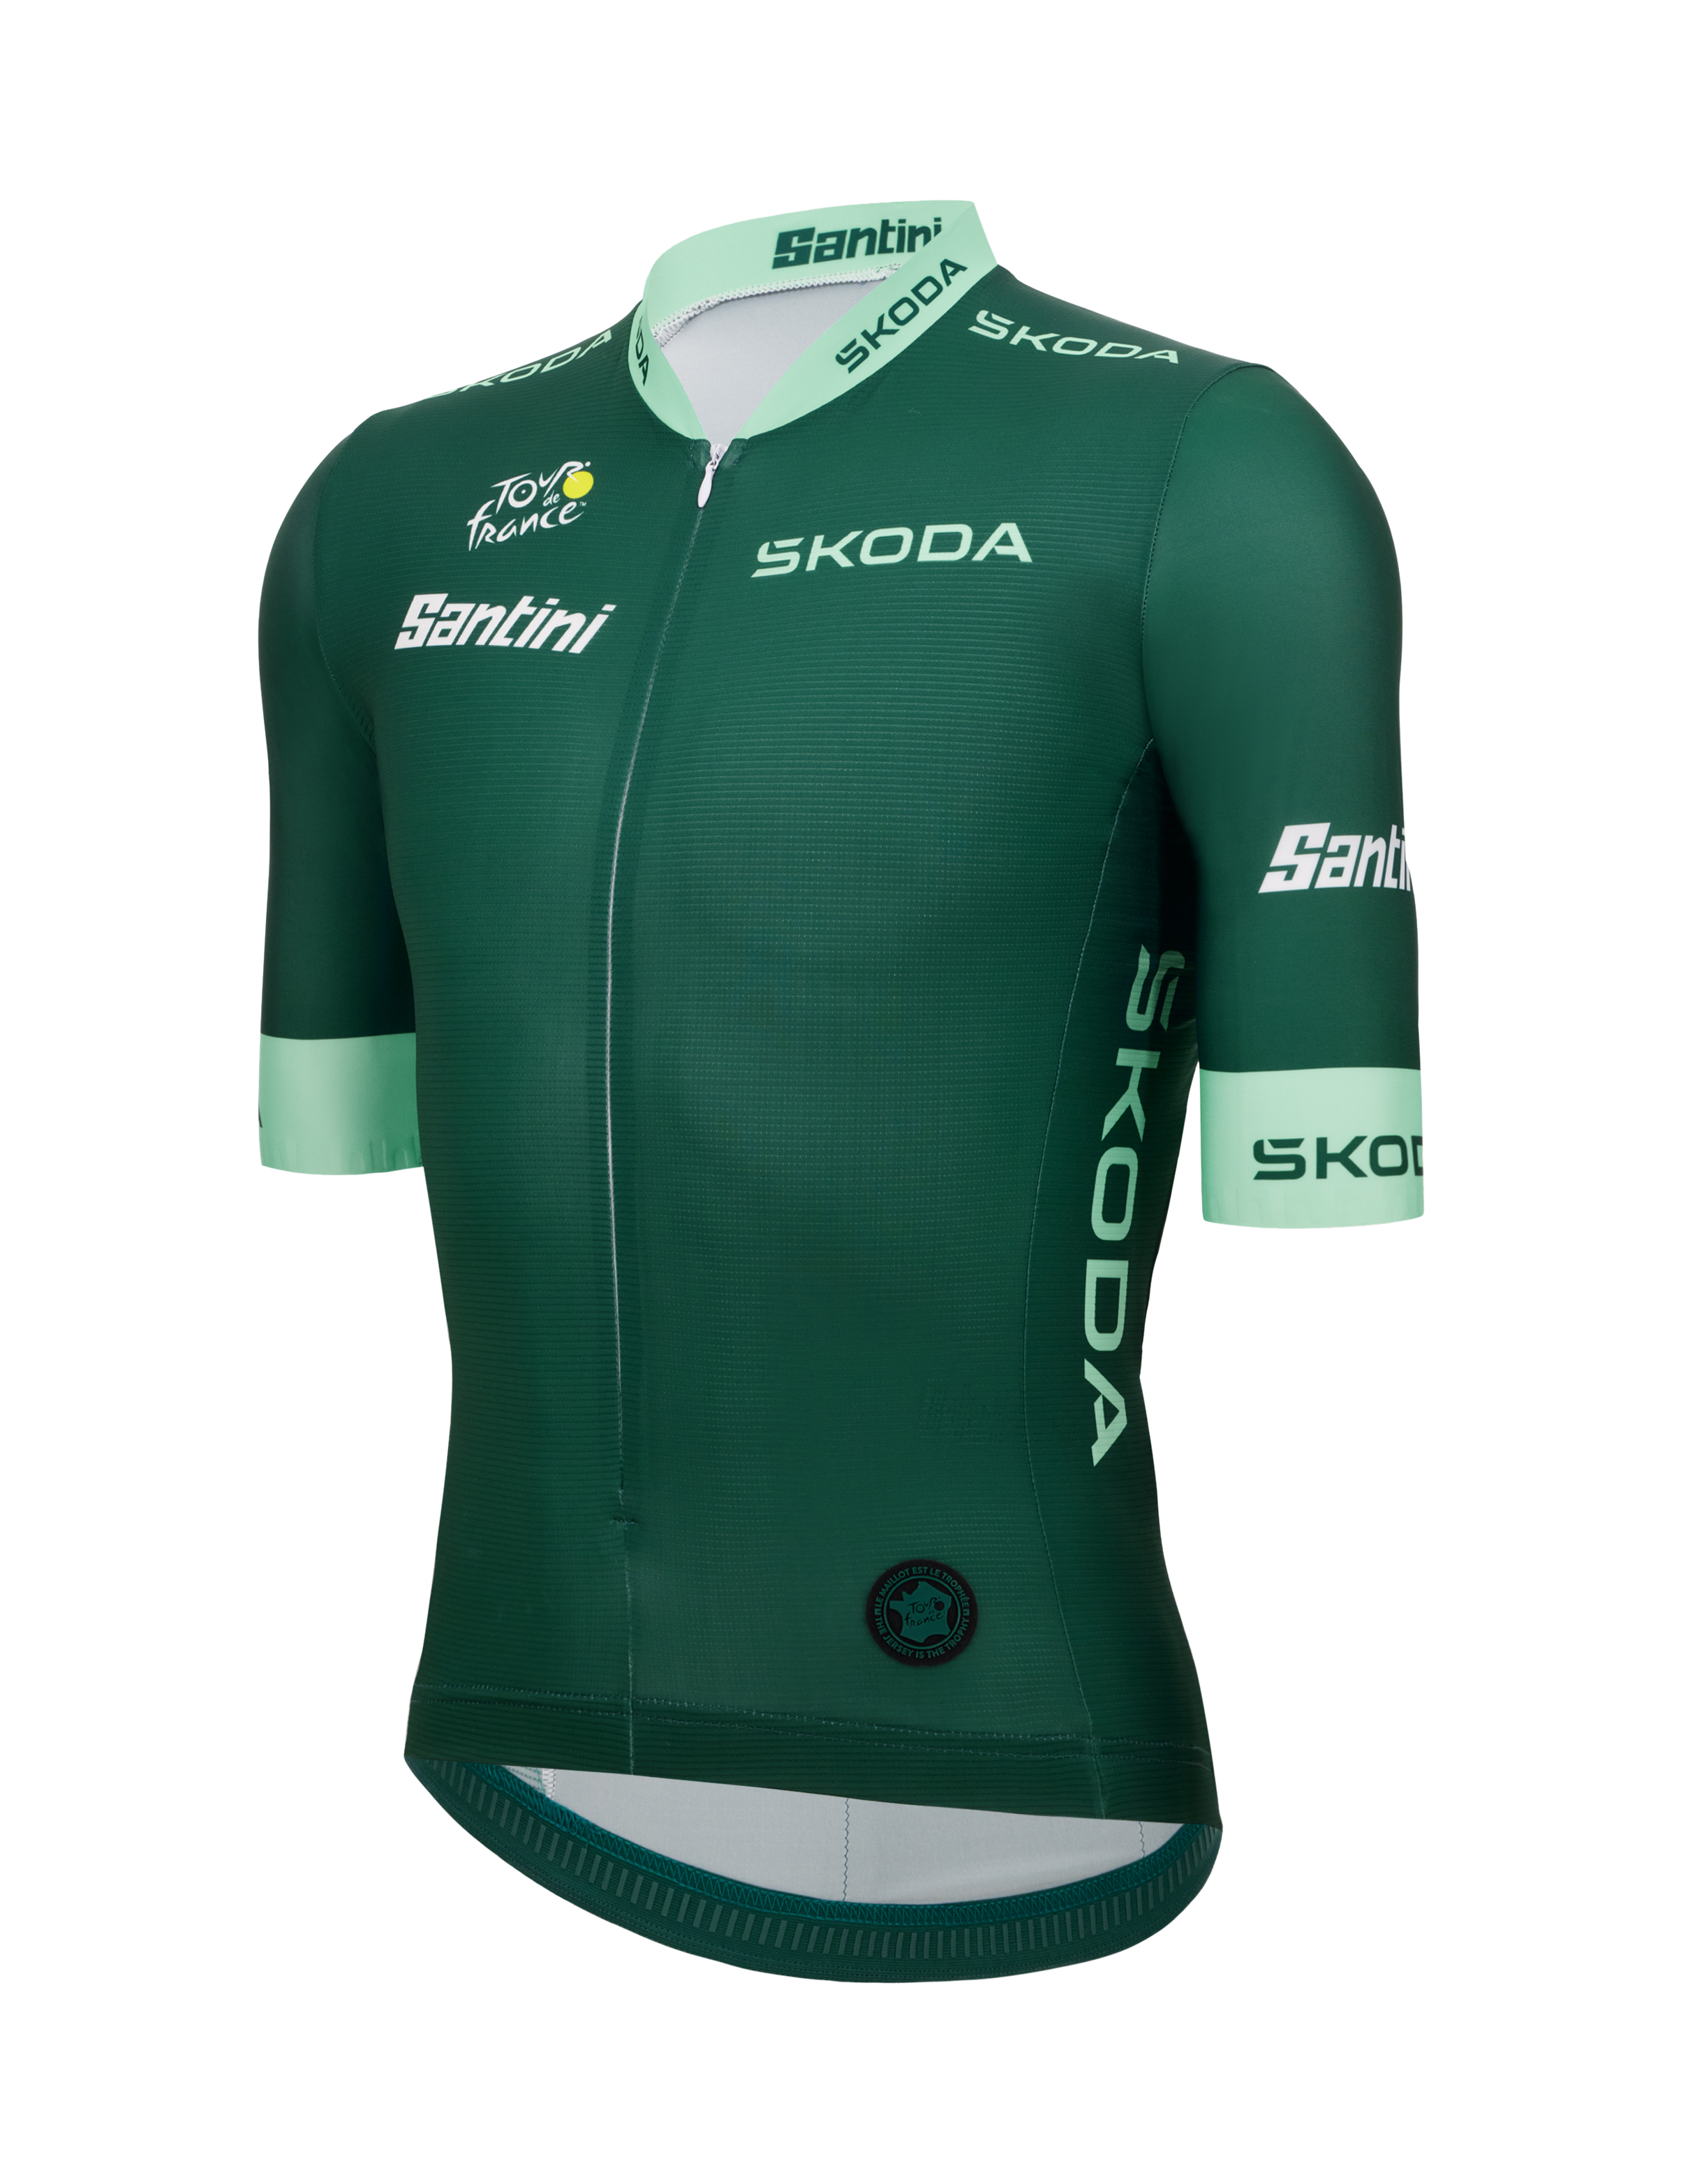 Tour de France - Green  Jersey Replica